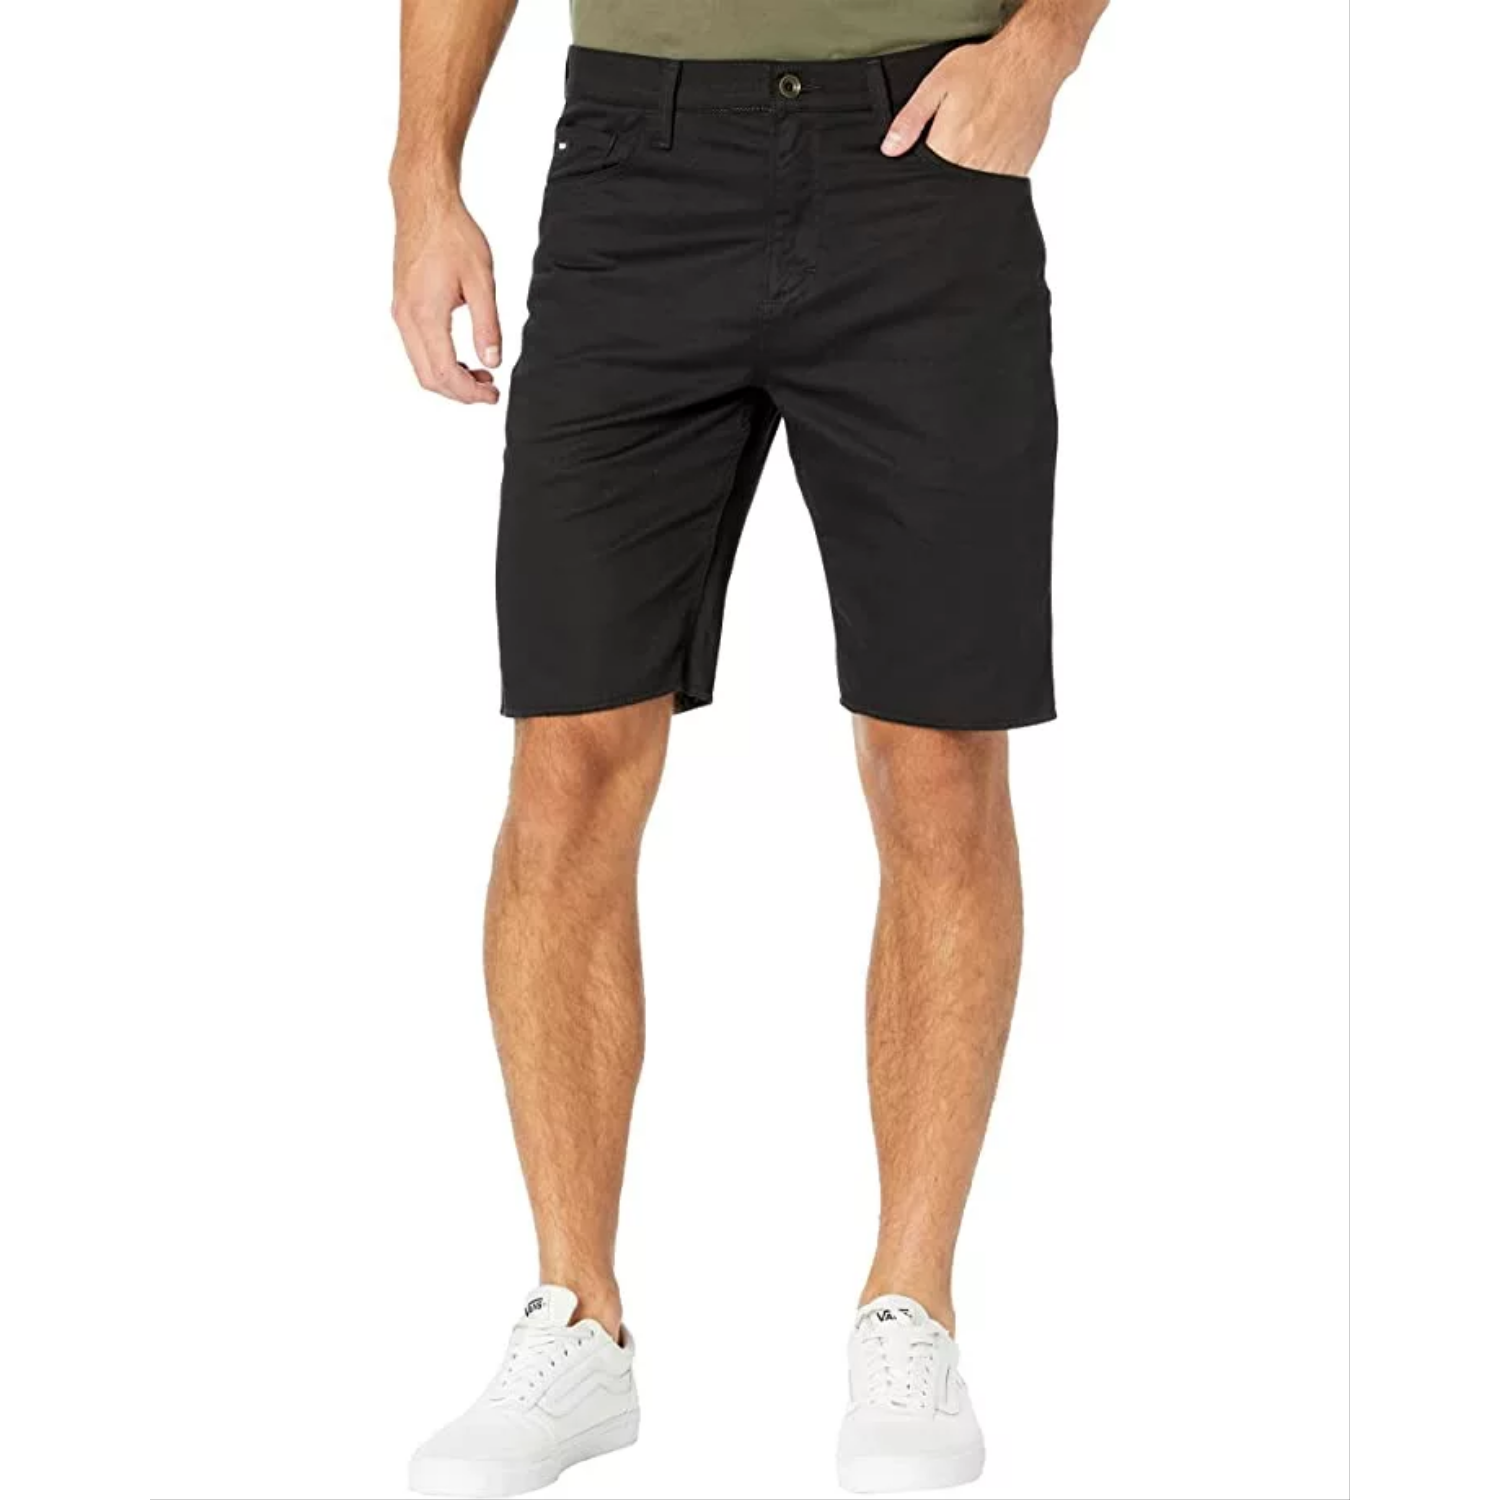 Shop Men\'s Shorts Great - - Deals! Comfortable & Stylish